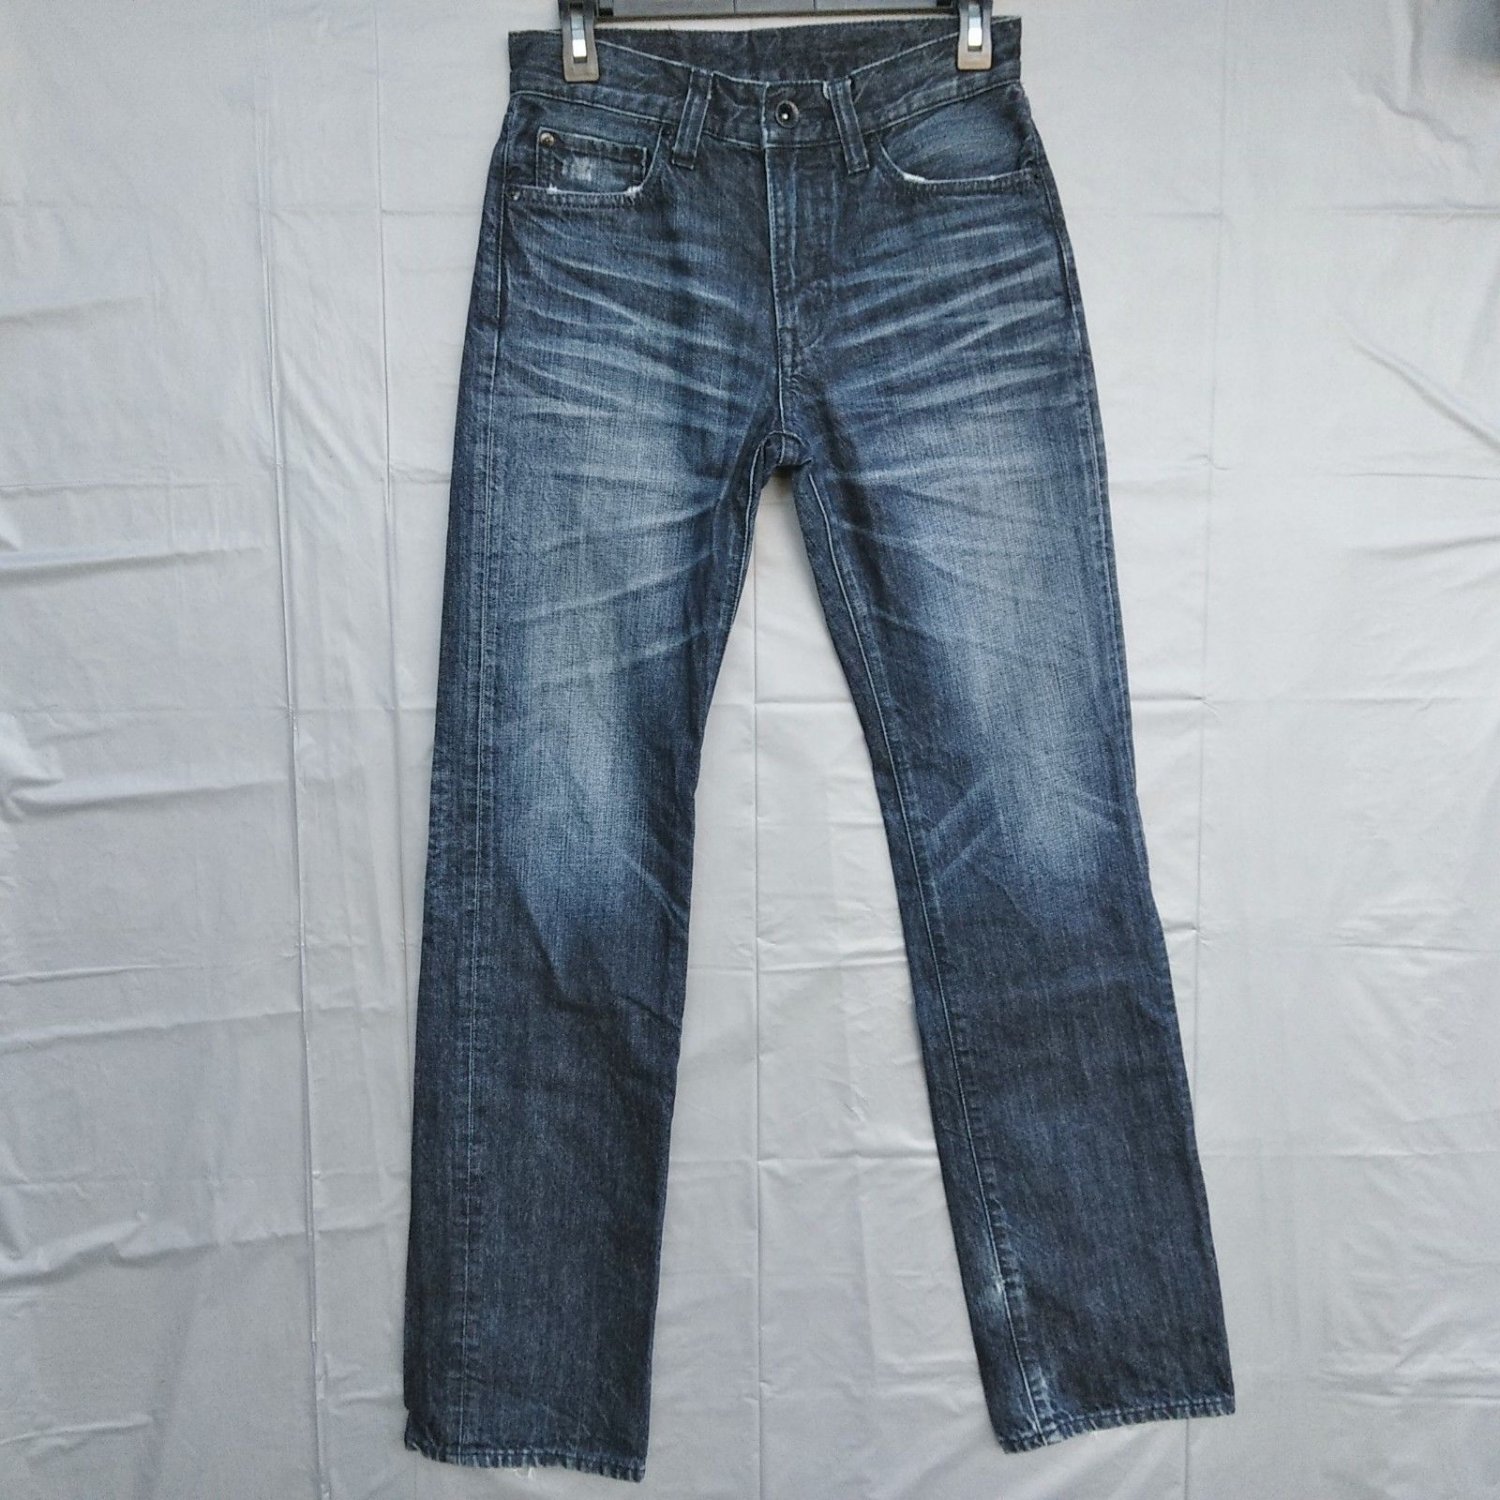 Uniqlo Regular Fit Straight Leg Men's Jeans Size 28 X 33 Distressed